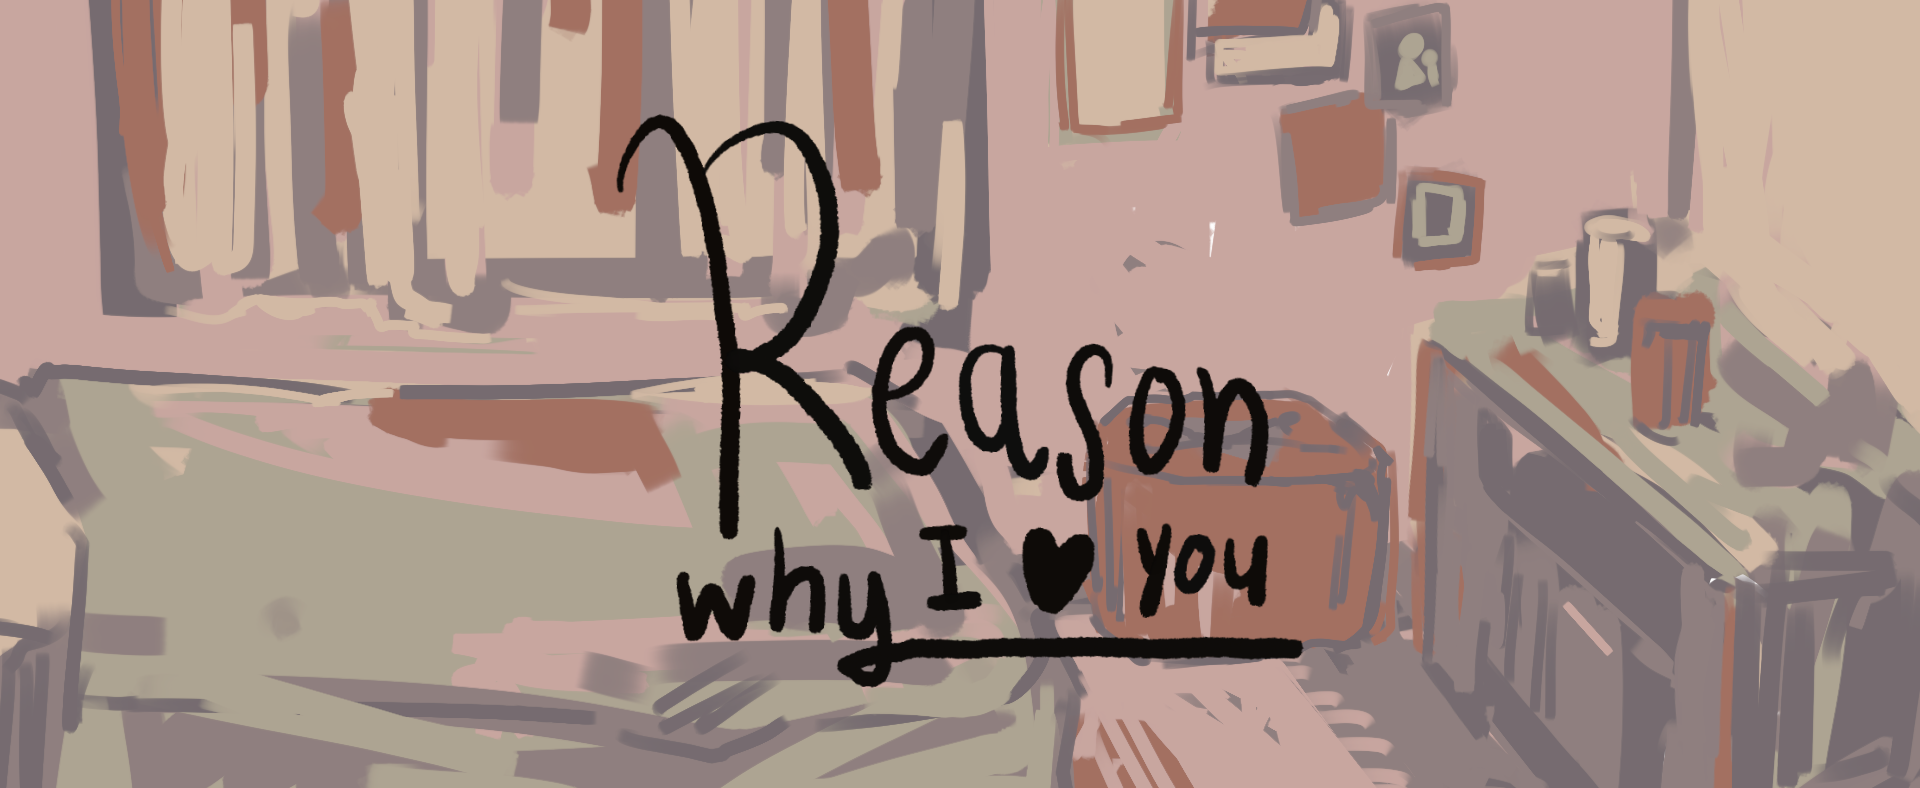 Reason why I love you